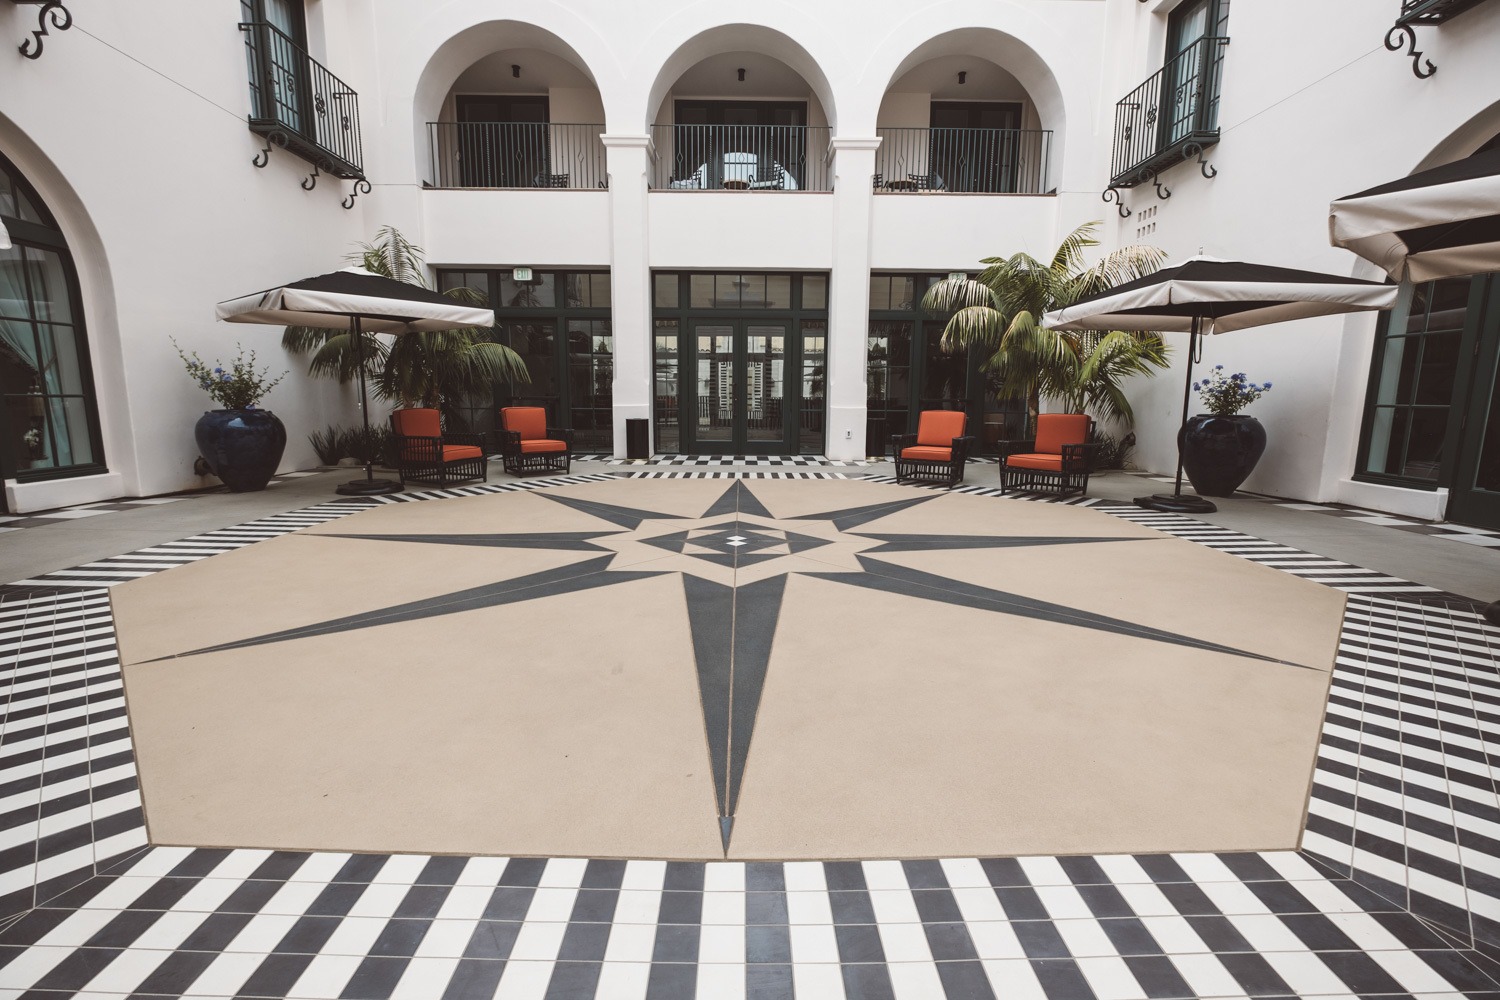 Courtyard at Hotel Californian